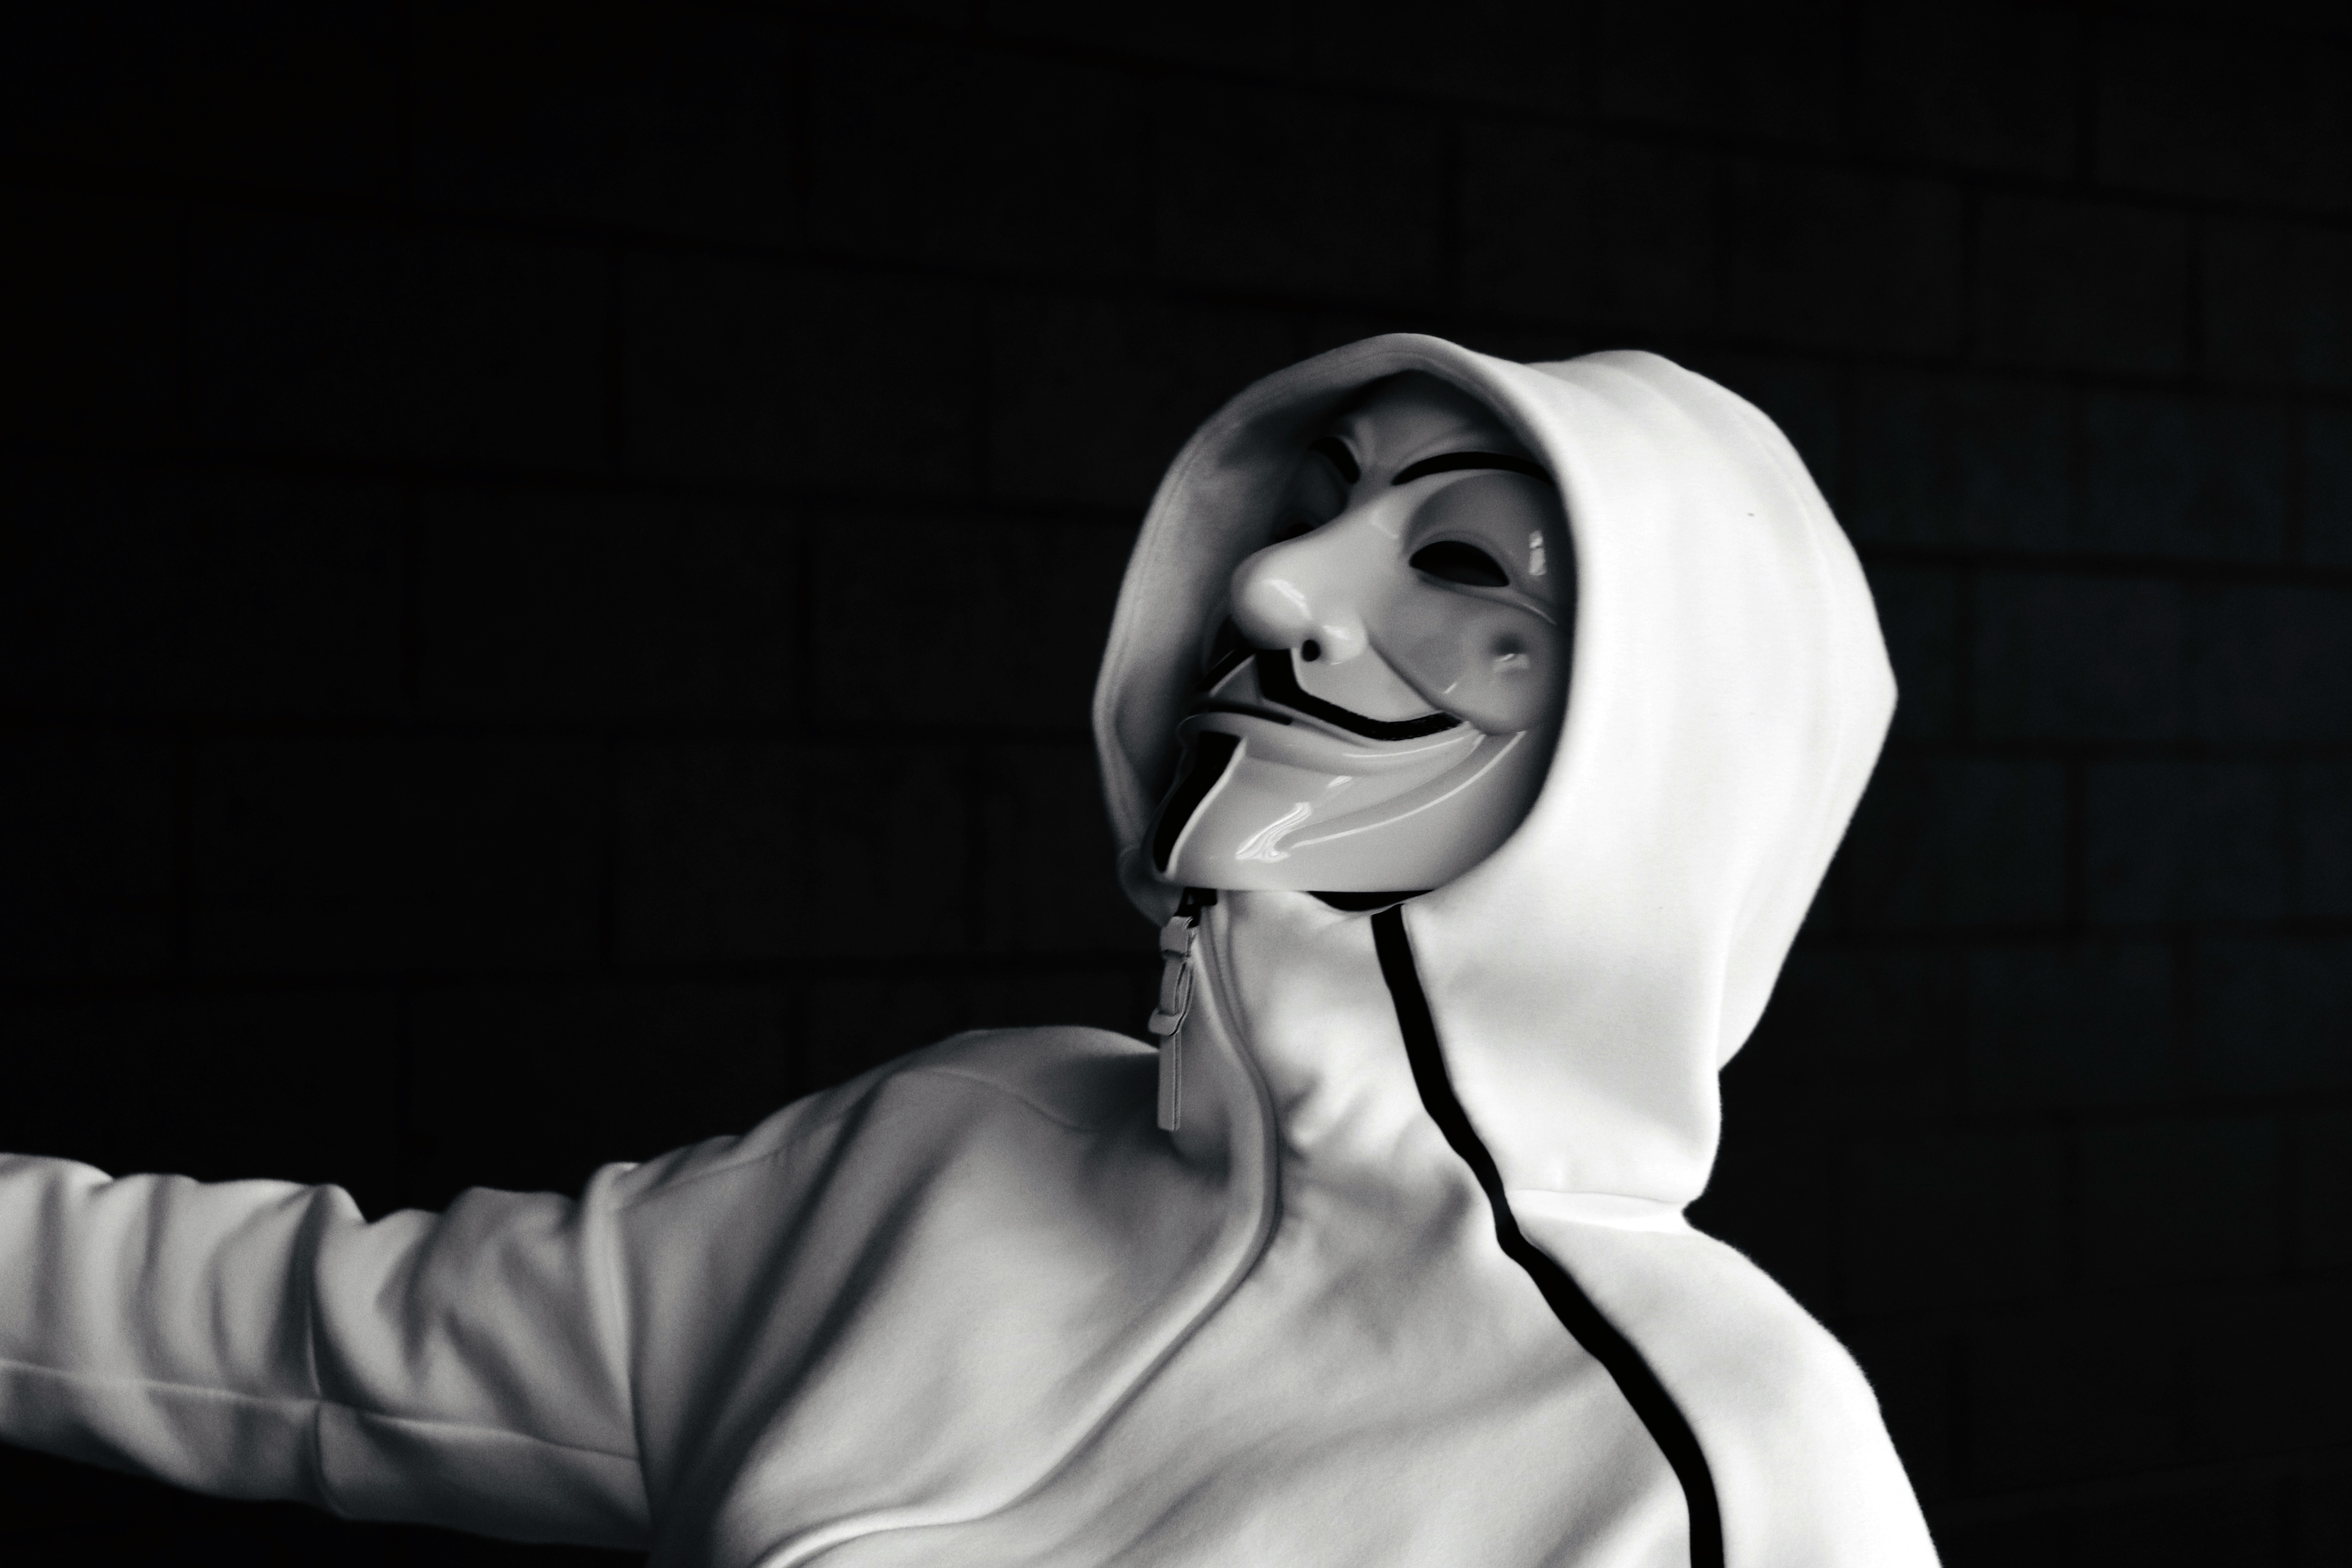 anonymous, chb, miscellanea, miscellaneous, bw, mask, hood